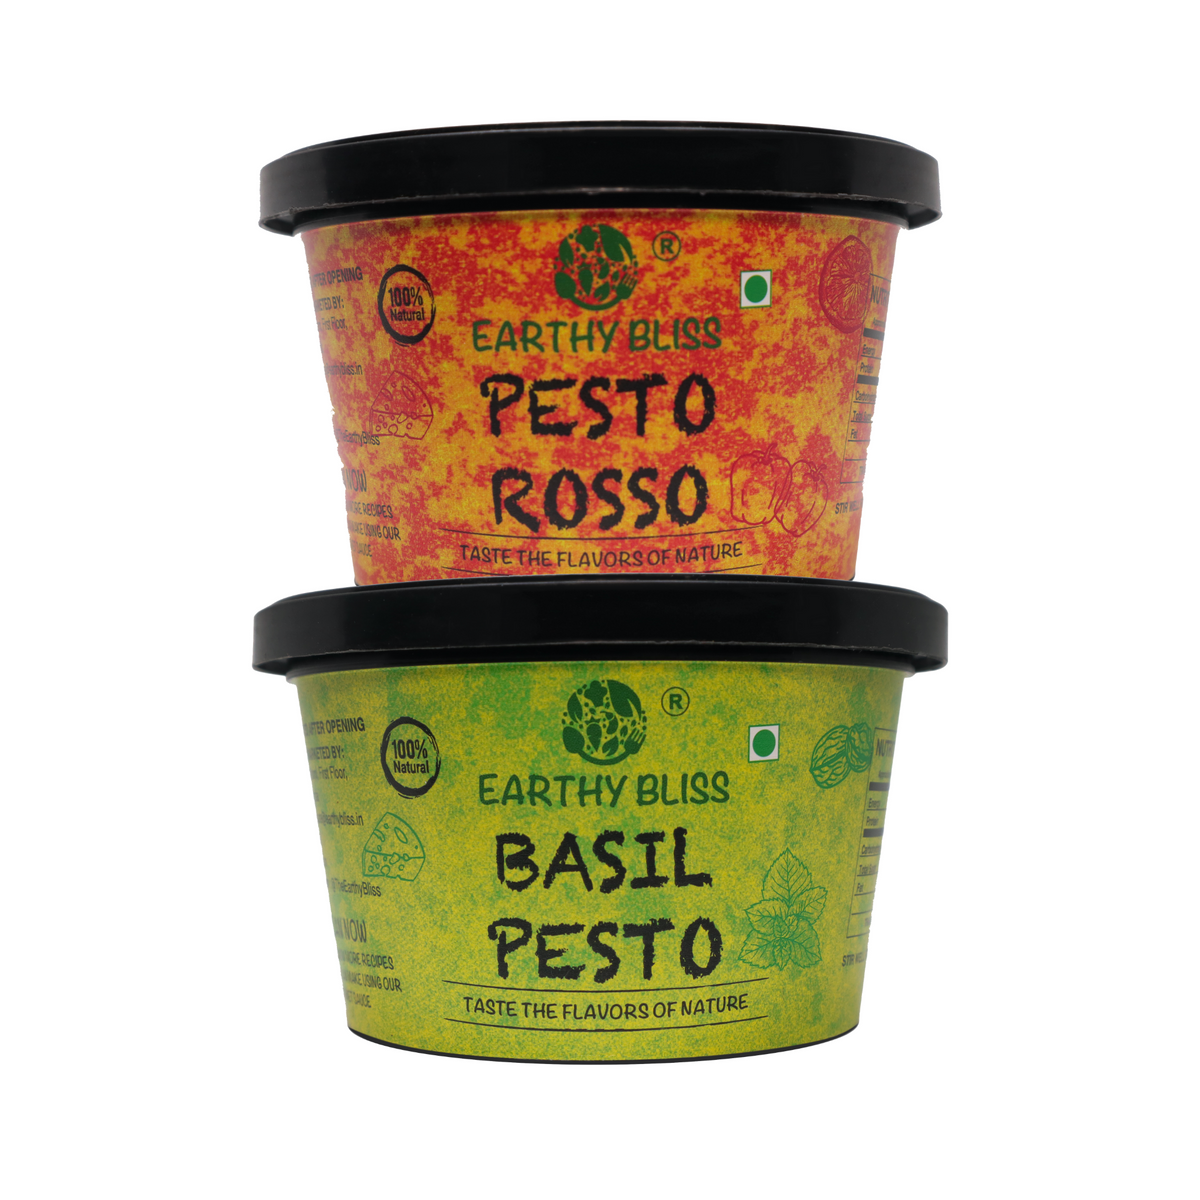 Pesto Besto - Earthy Bliss